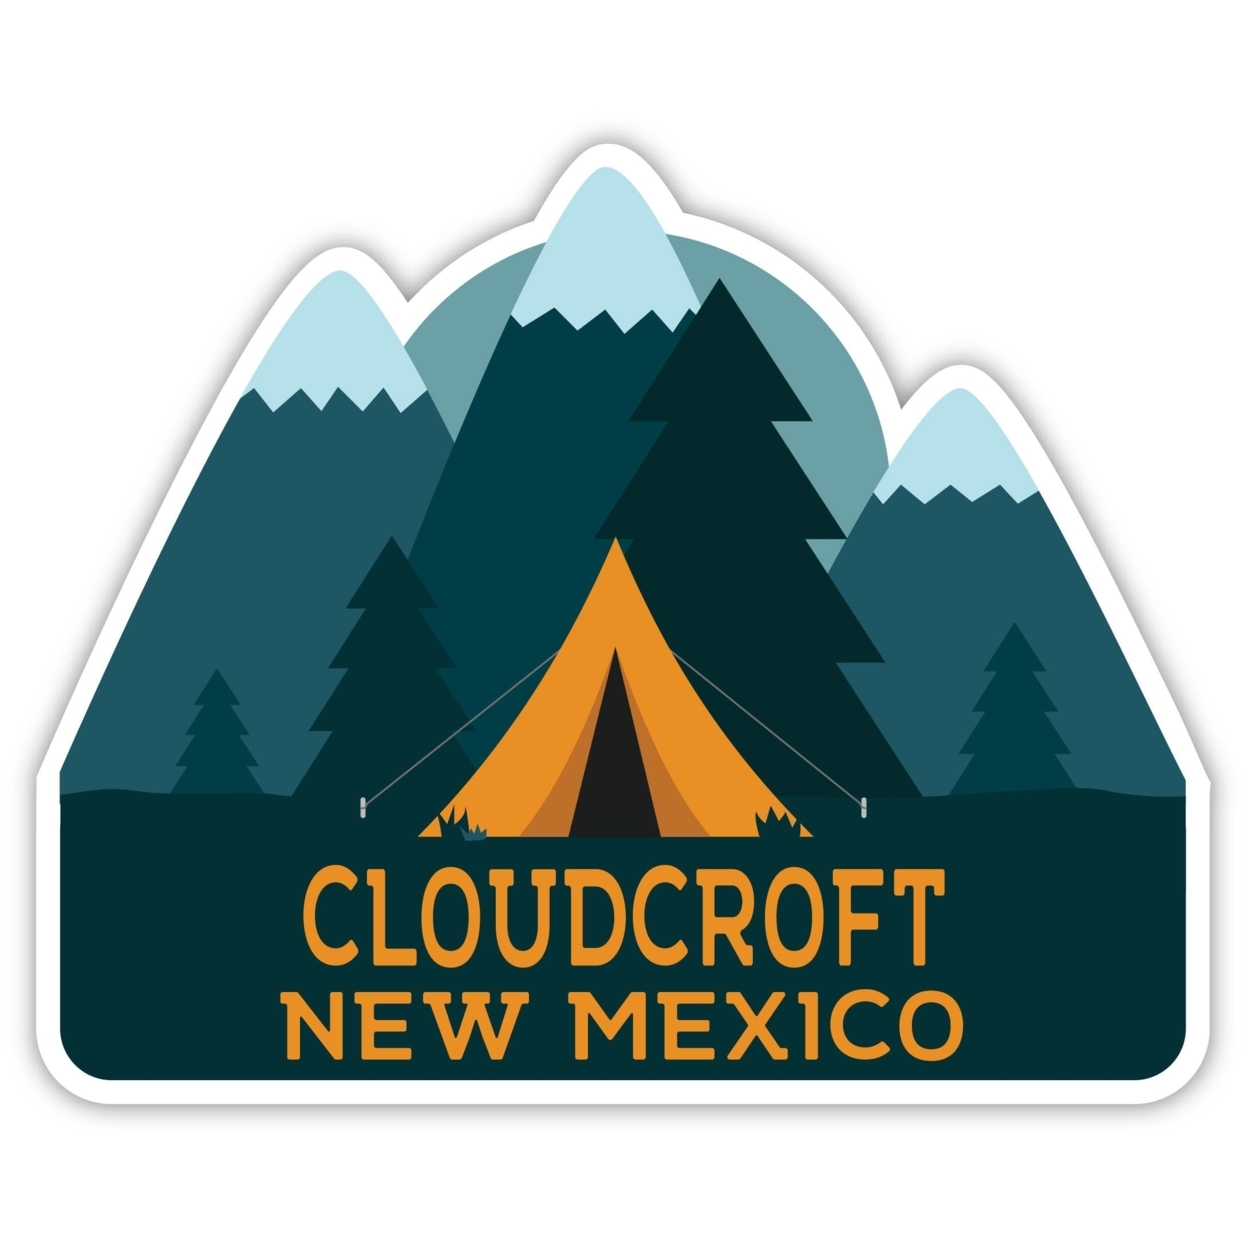 Cloudcroft New Mexico Souvenir Decorative Stickers (Choose Theme And Size) - 4-Pack, 2-Inch, Tent